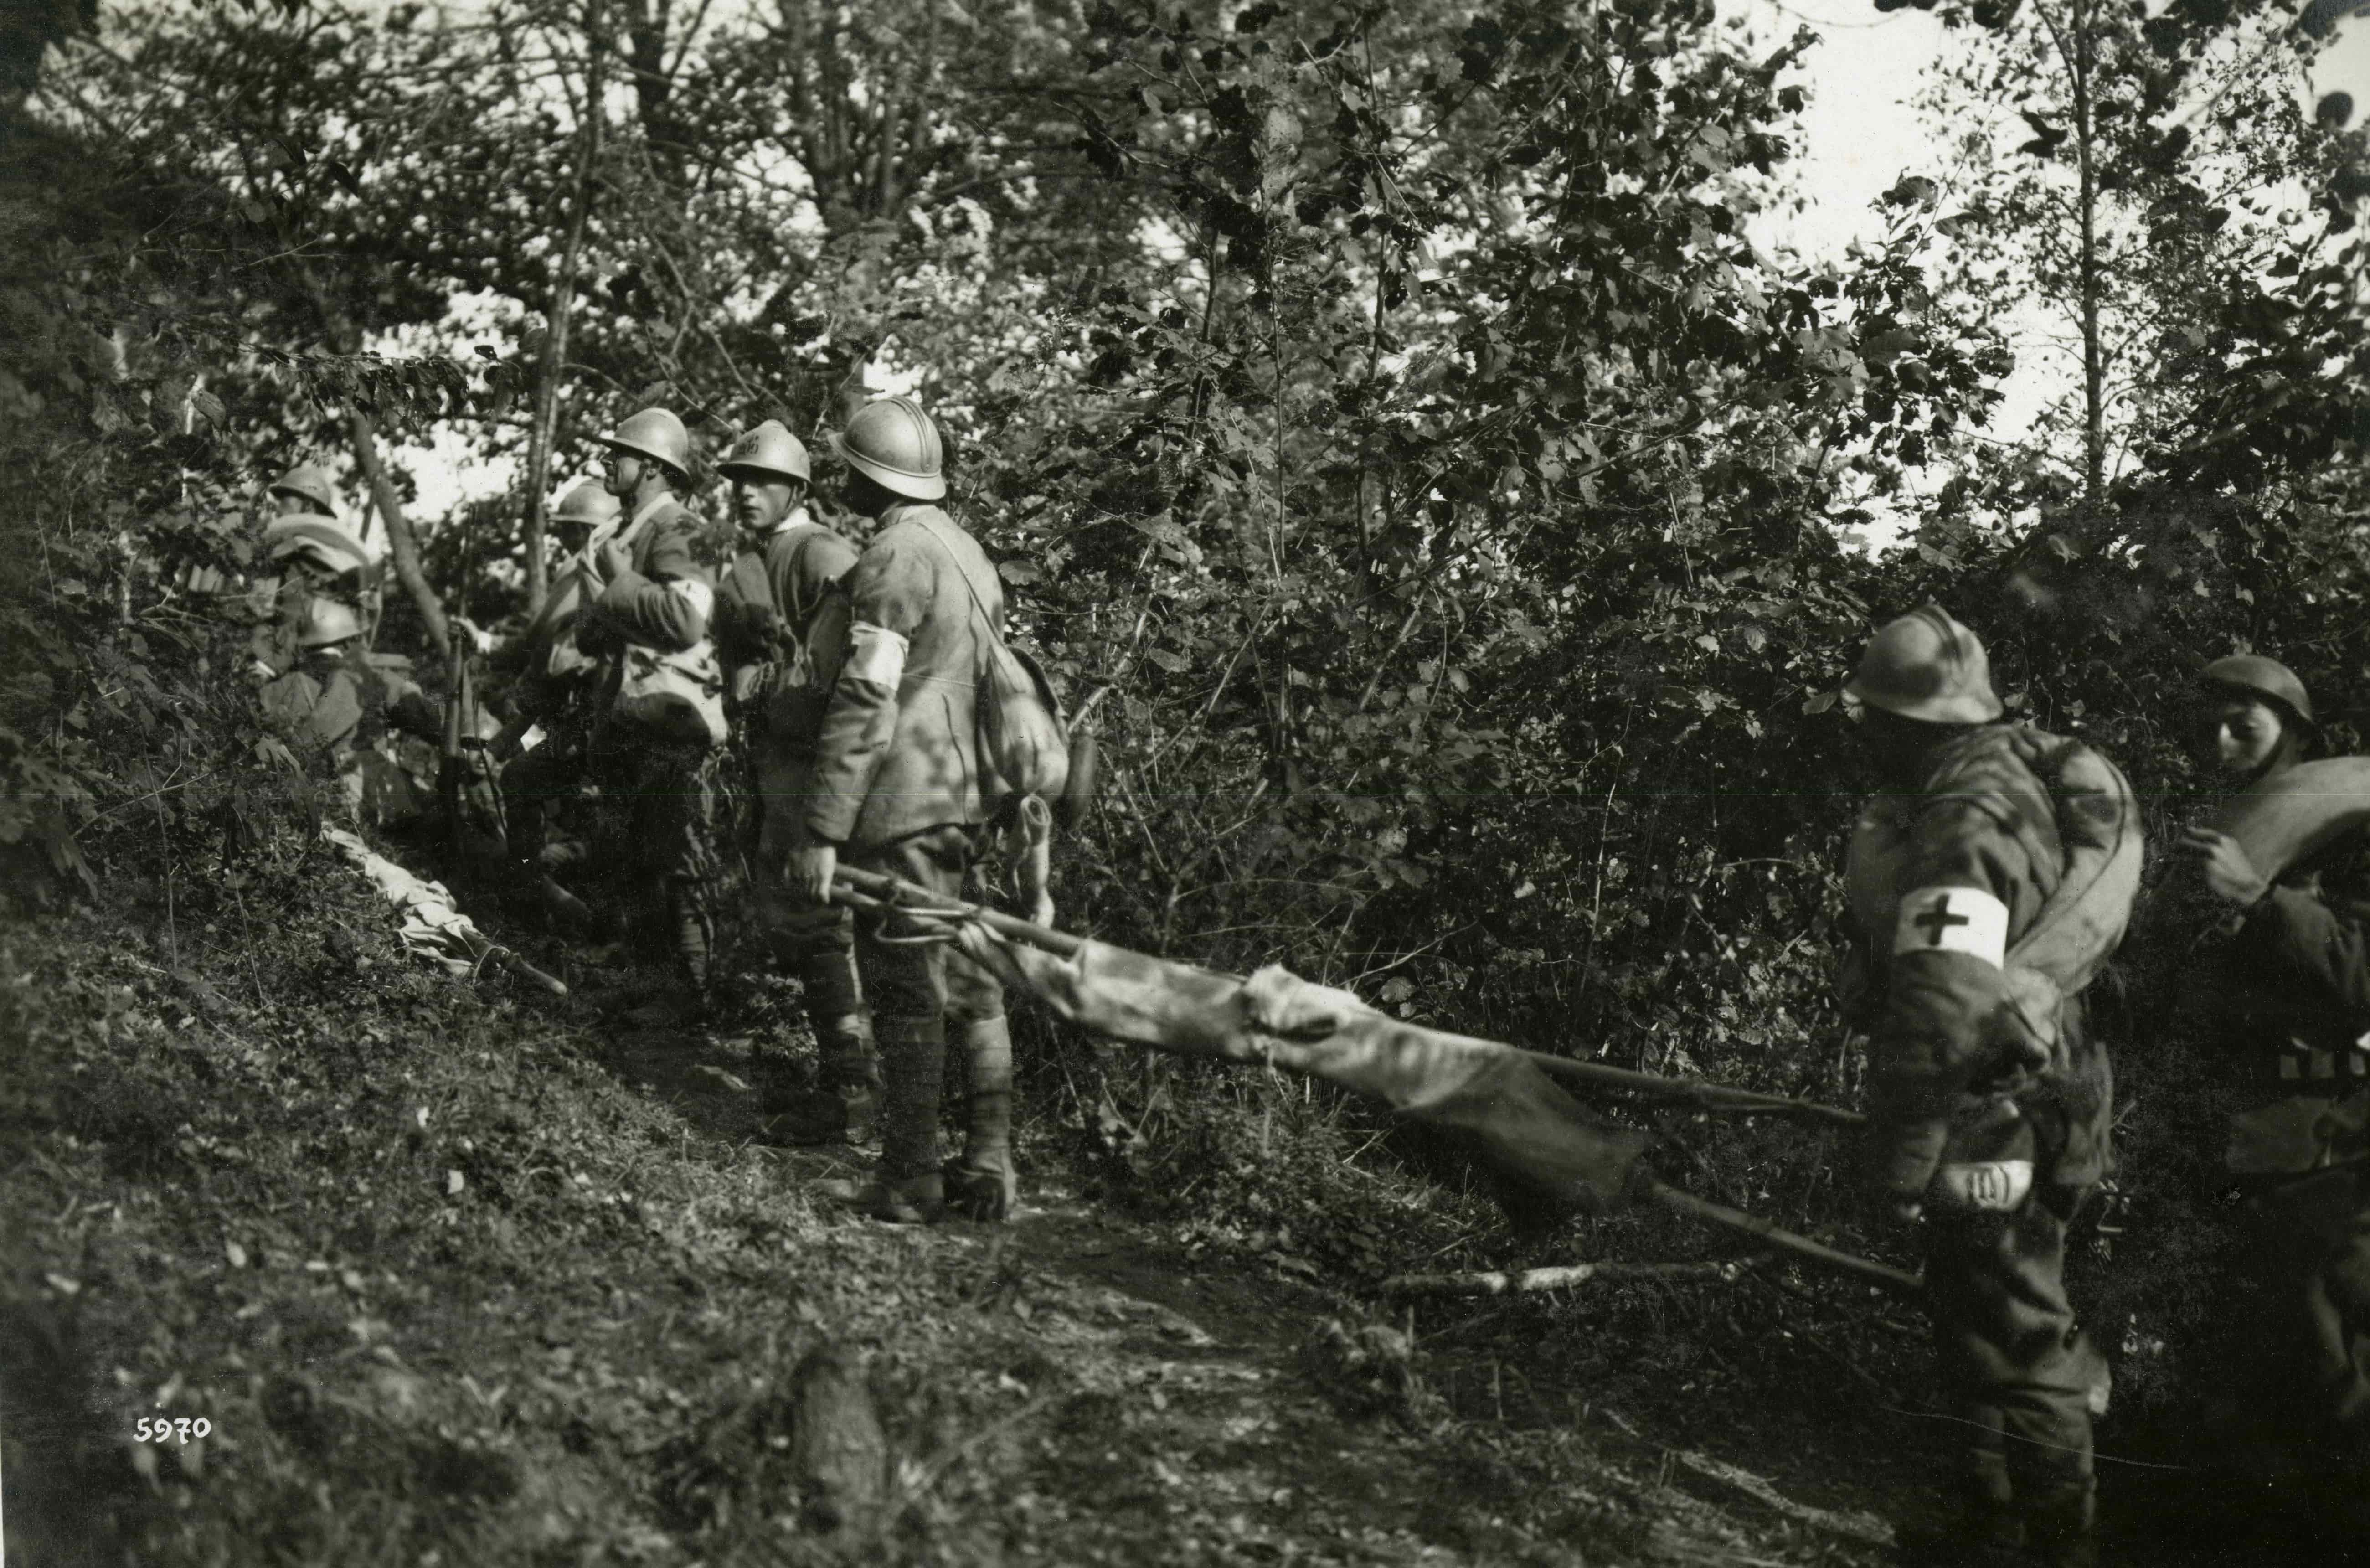 La sanit segue le truppe impegnate nell’offensiva. Ottobre 1918 [AF MSIGR 2/704]